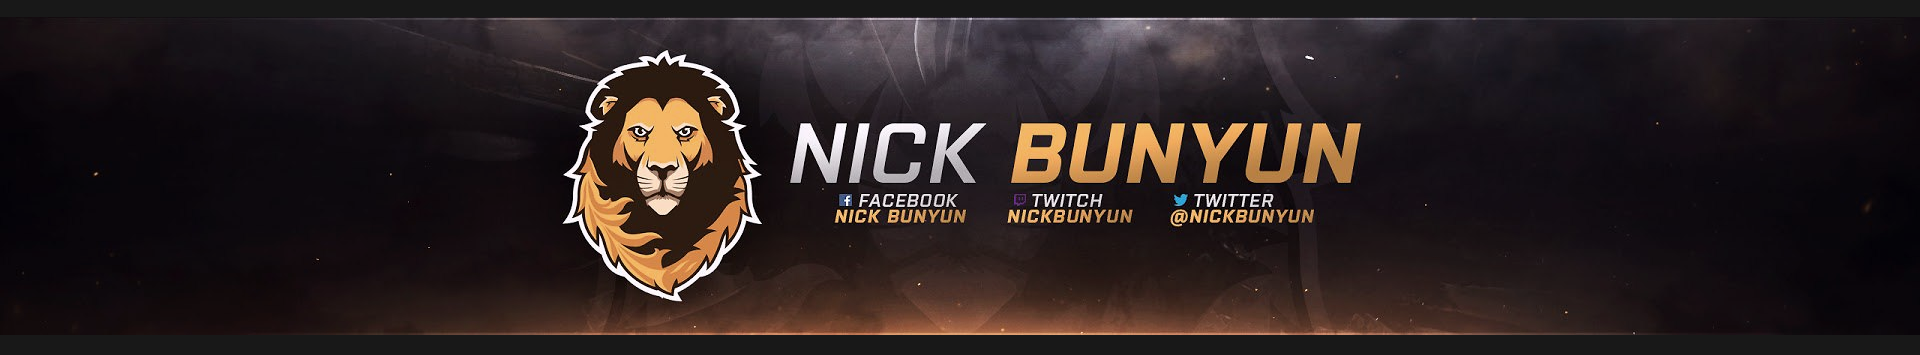 NickBunyun Banner